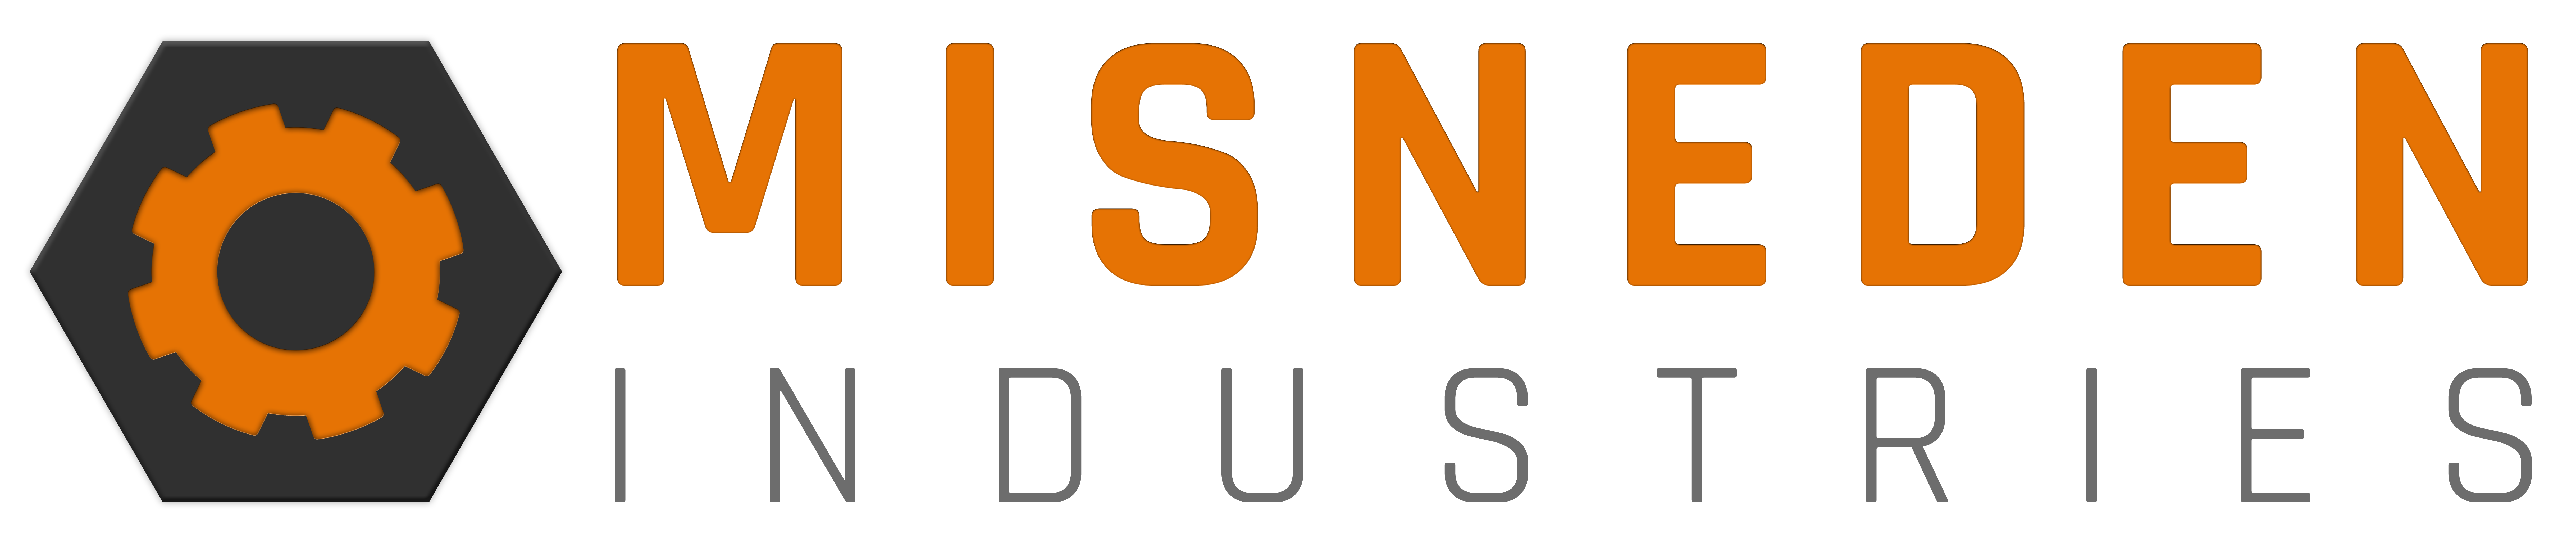 Misneden Industries Logo Text.png